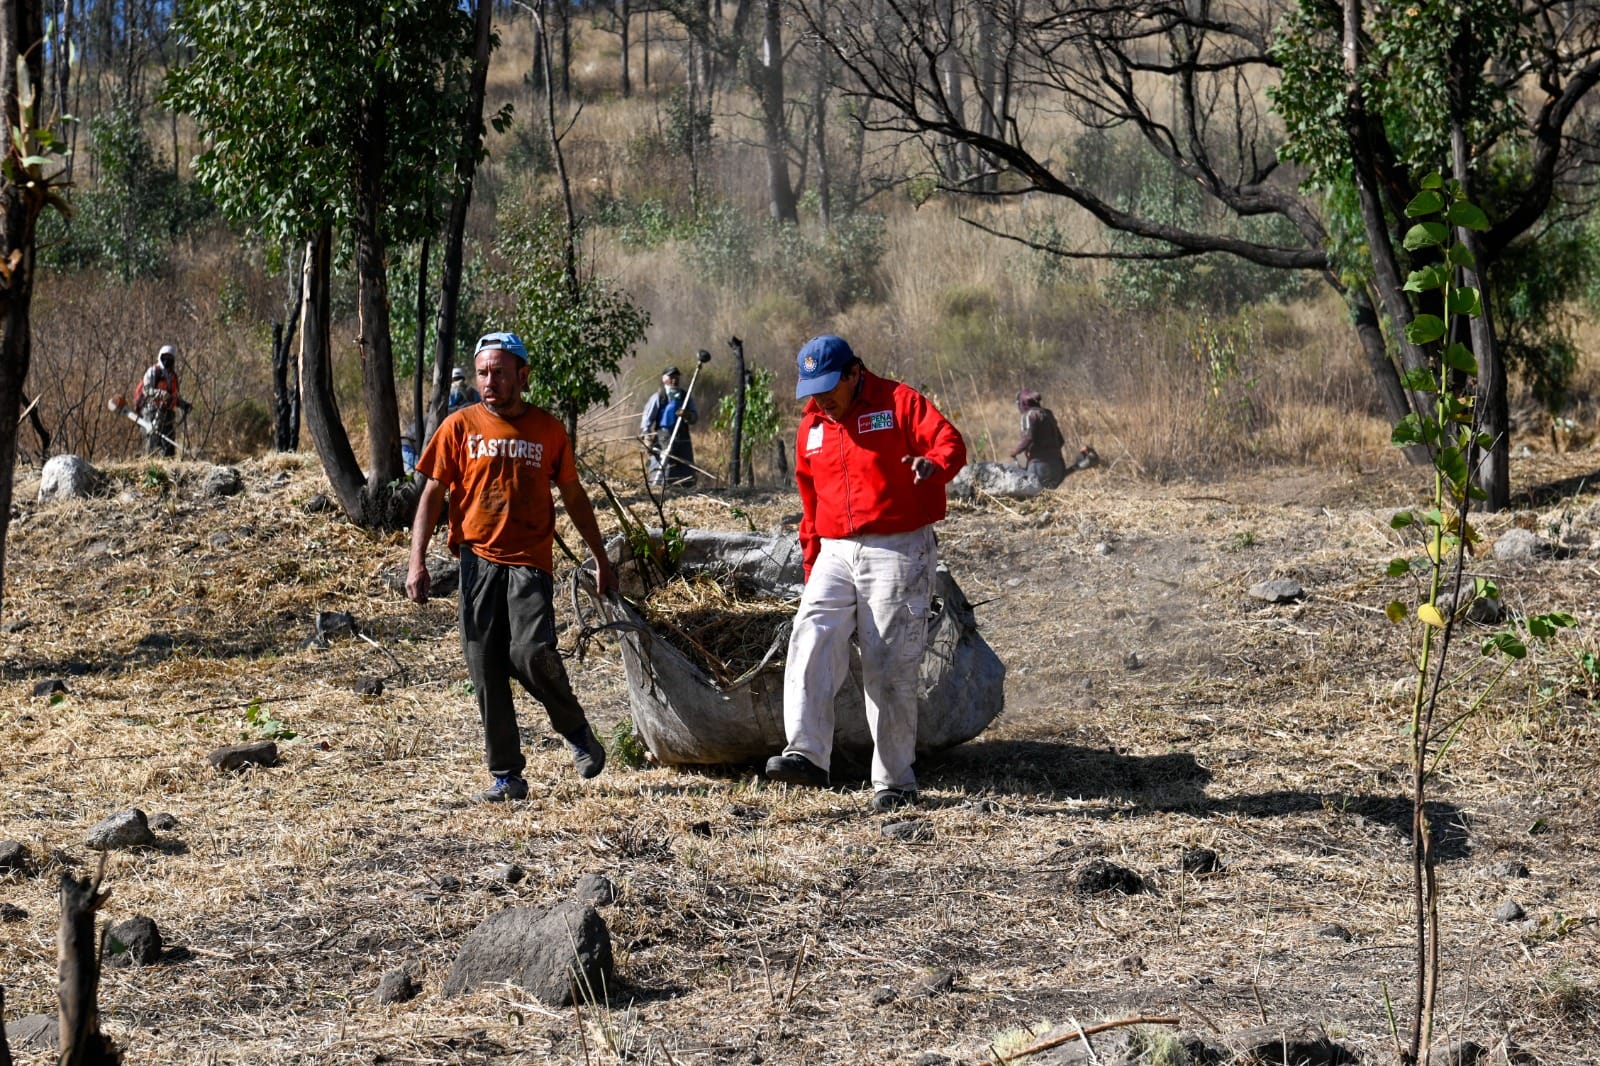 Limpian el cerro de Moctezuma en Naucalpan, buscan prevenir incendios. Foto: Gob. de Naucalpan 